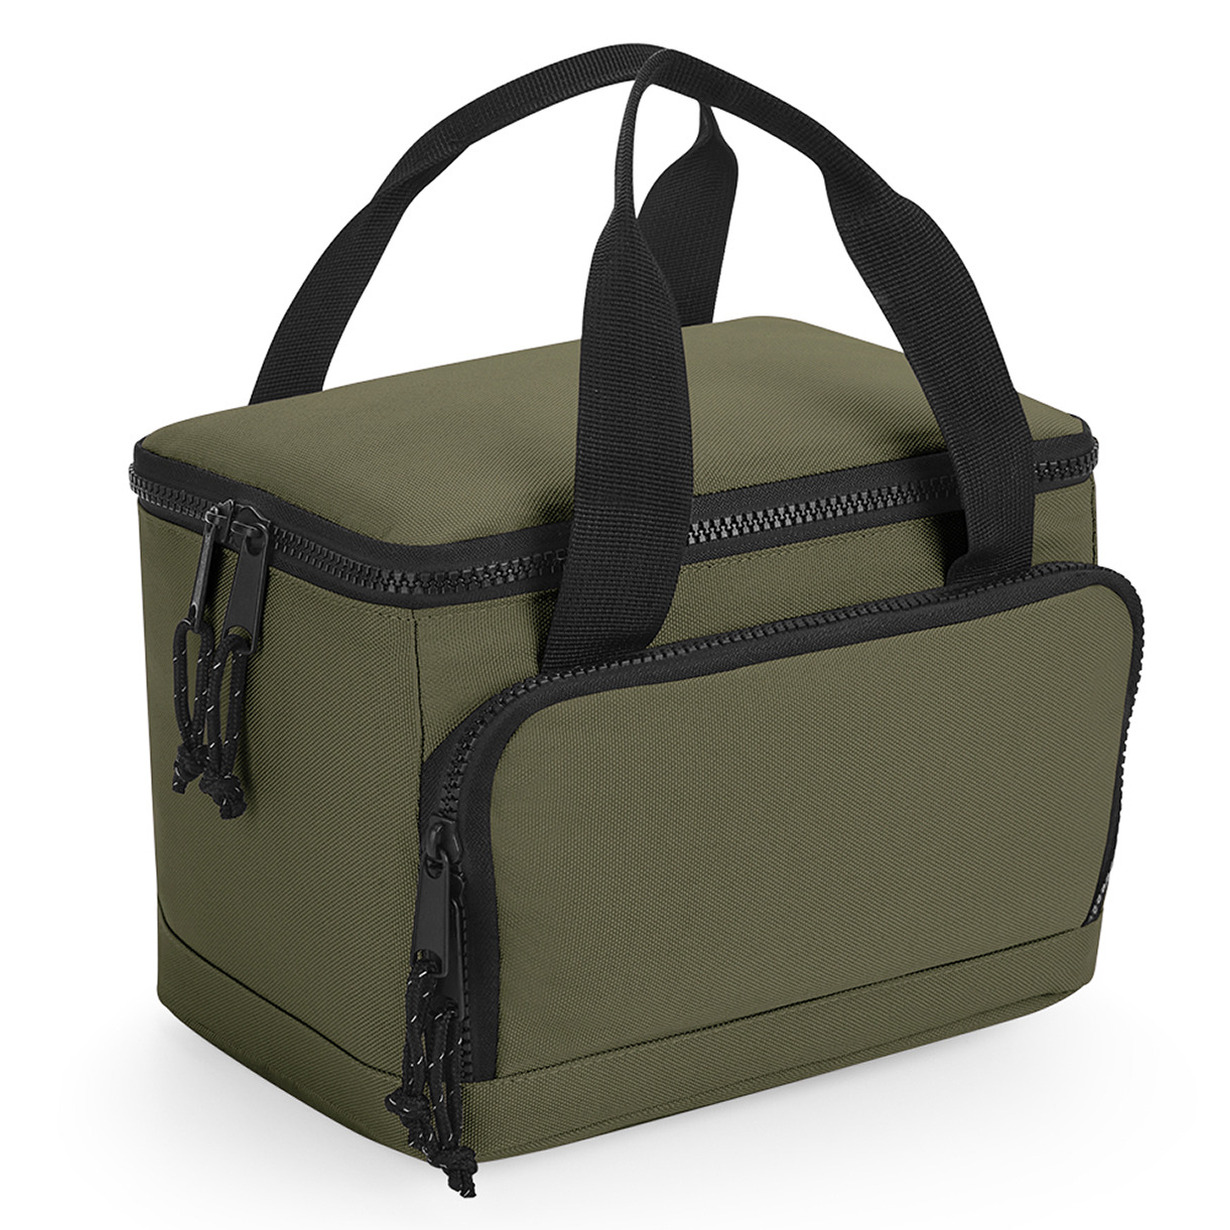 Bagbase koeltasje-lunch tas model Compact 24 x 17 x 17 cm 2 vakken military groen klein model